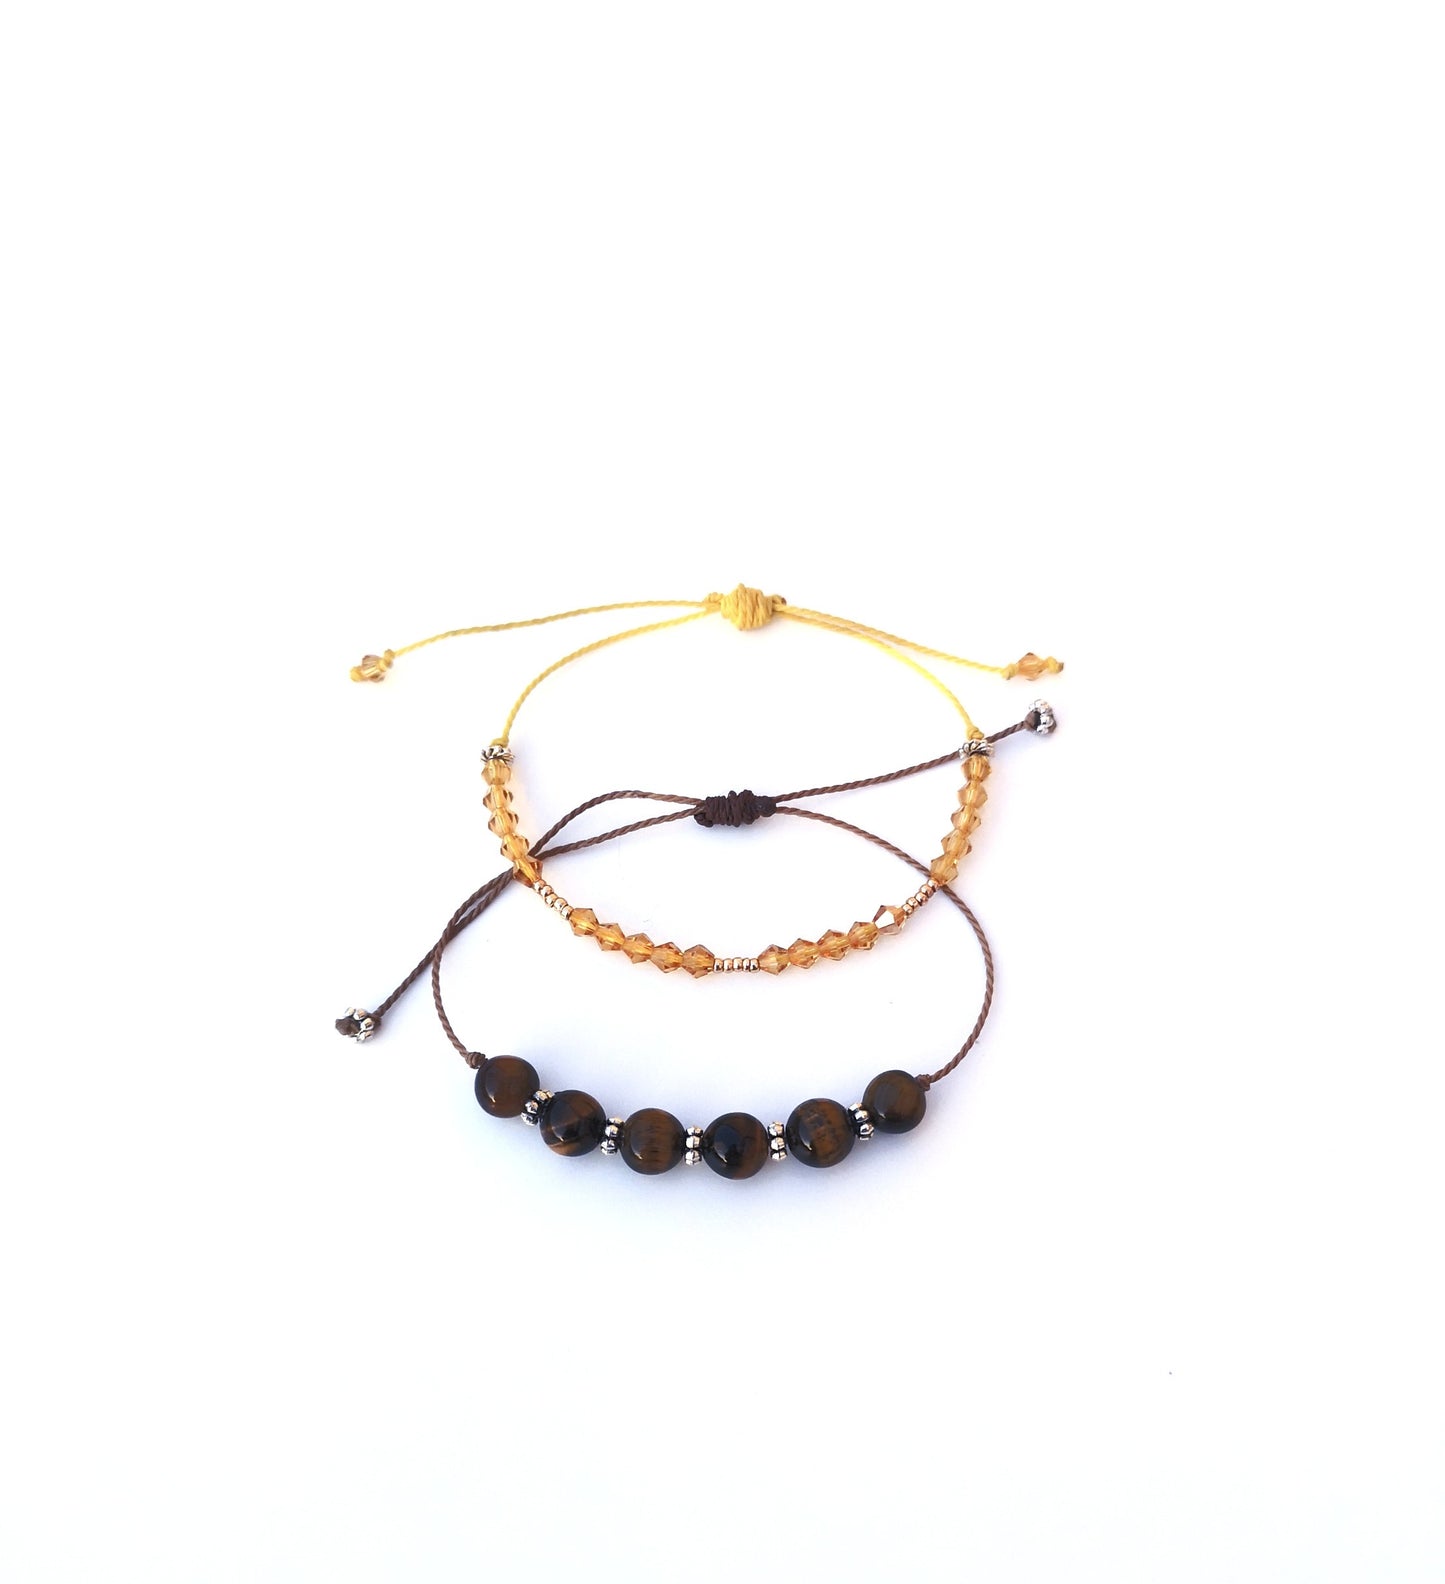 Brown and yellow crystal bead adjustable bracelet set.